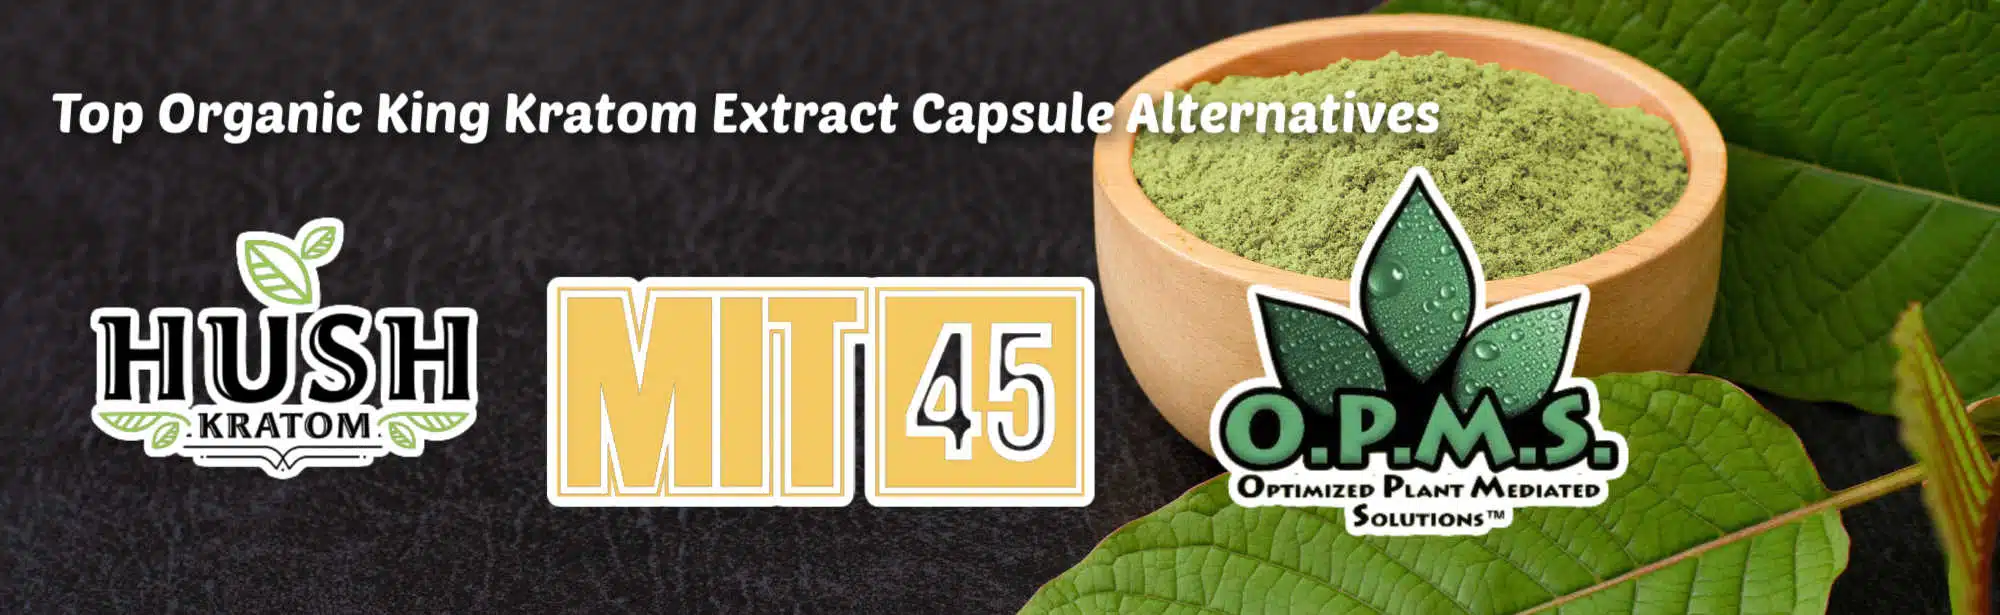 Organic king kratom capsules alternatives with Hush, MIT45, and OPMS logos